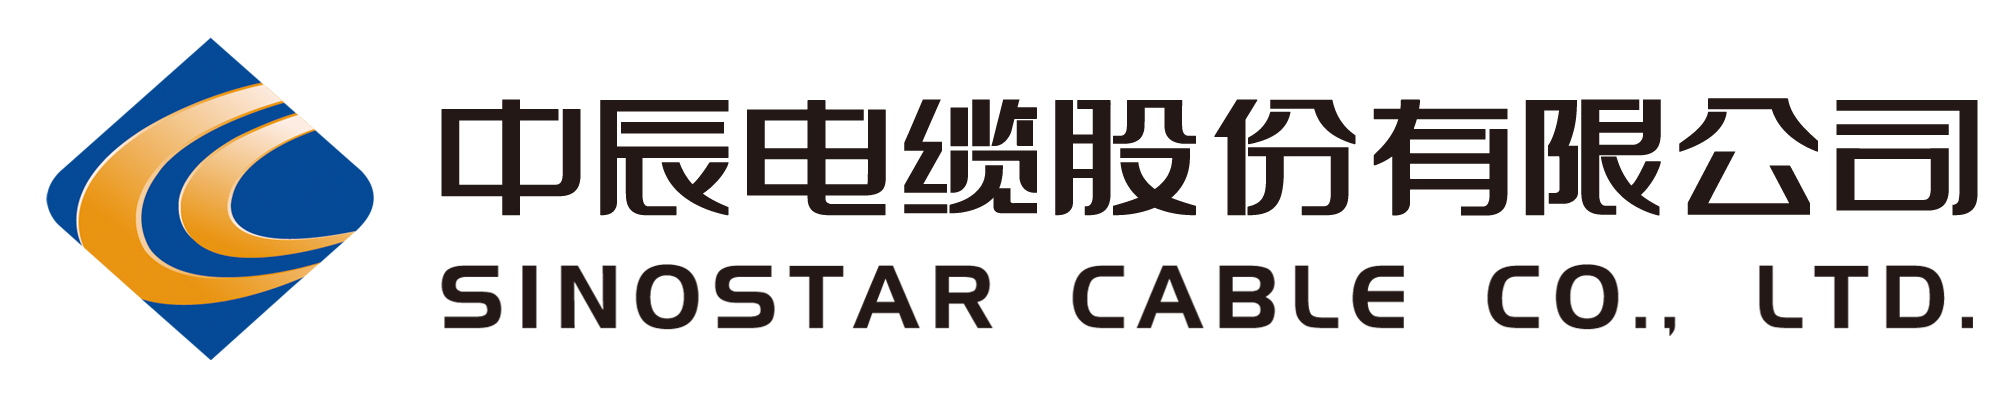 Sinostar Cable Co., Ltd.